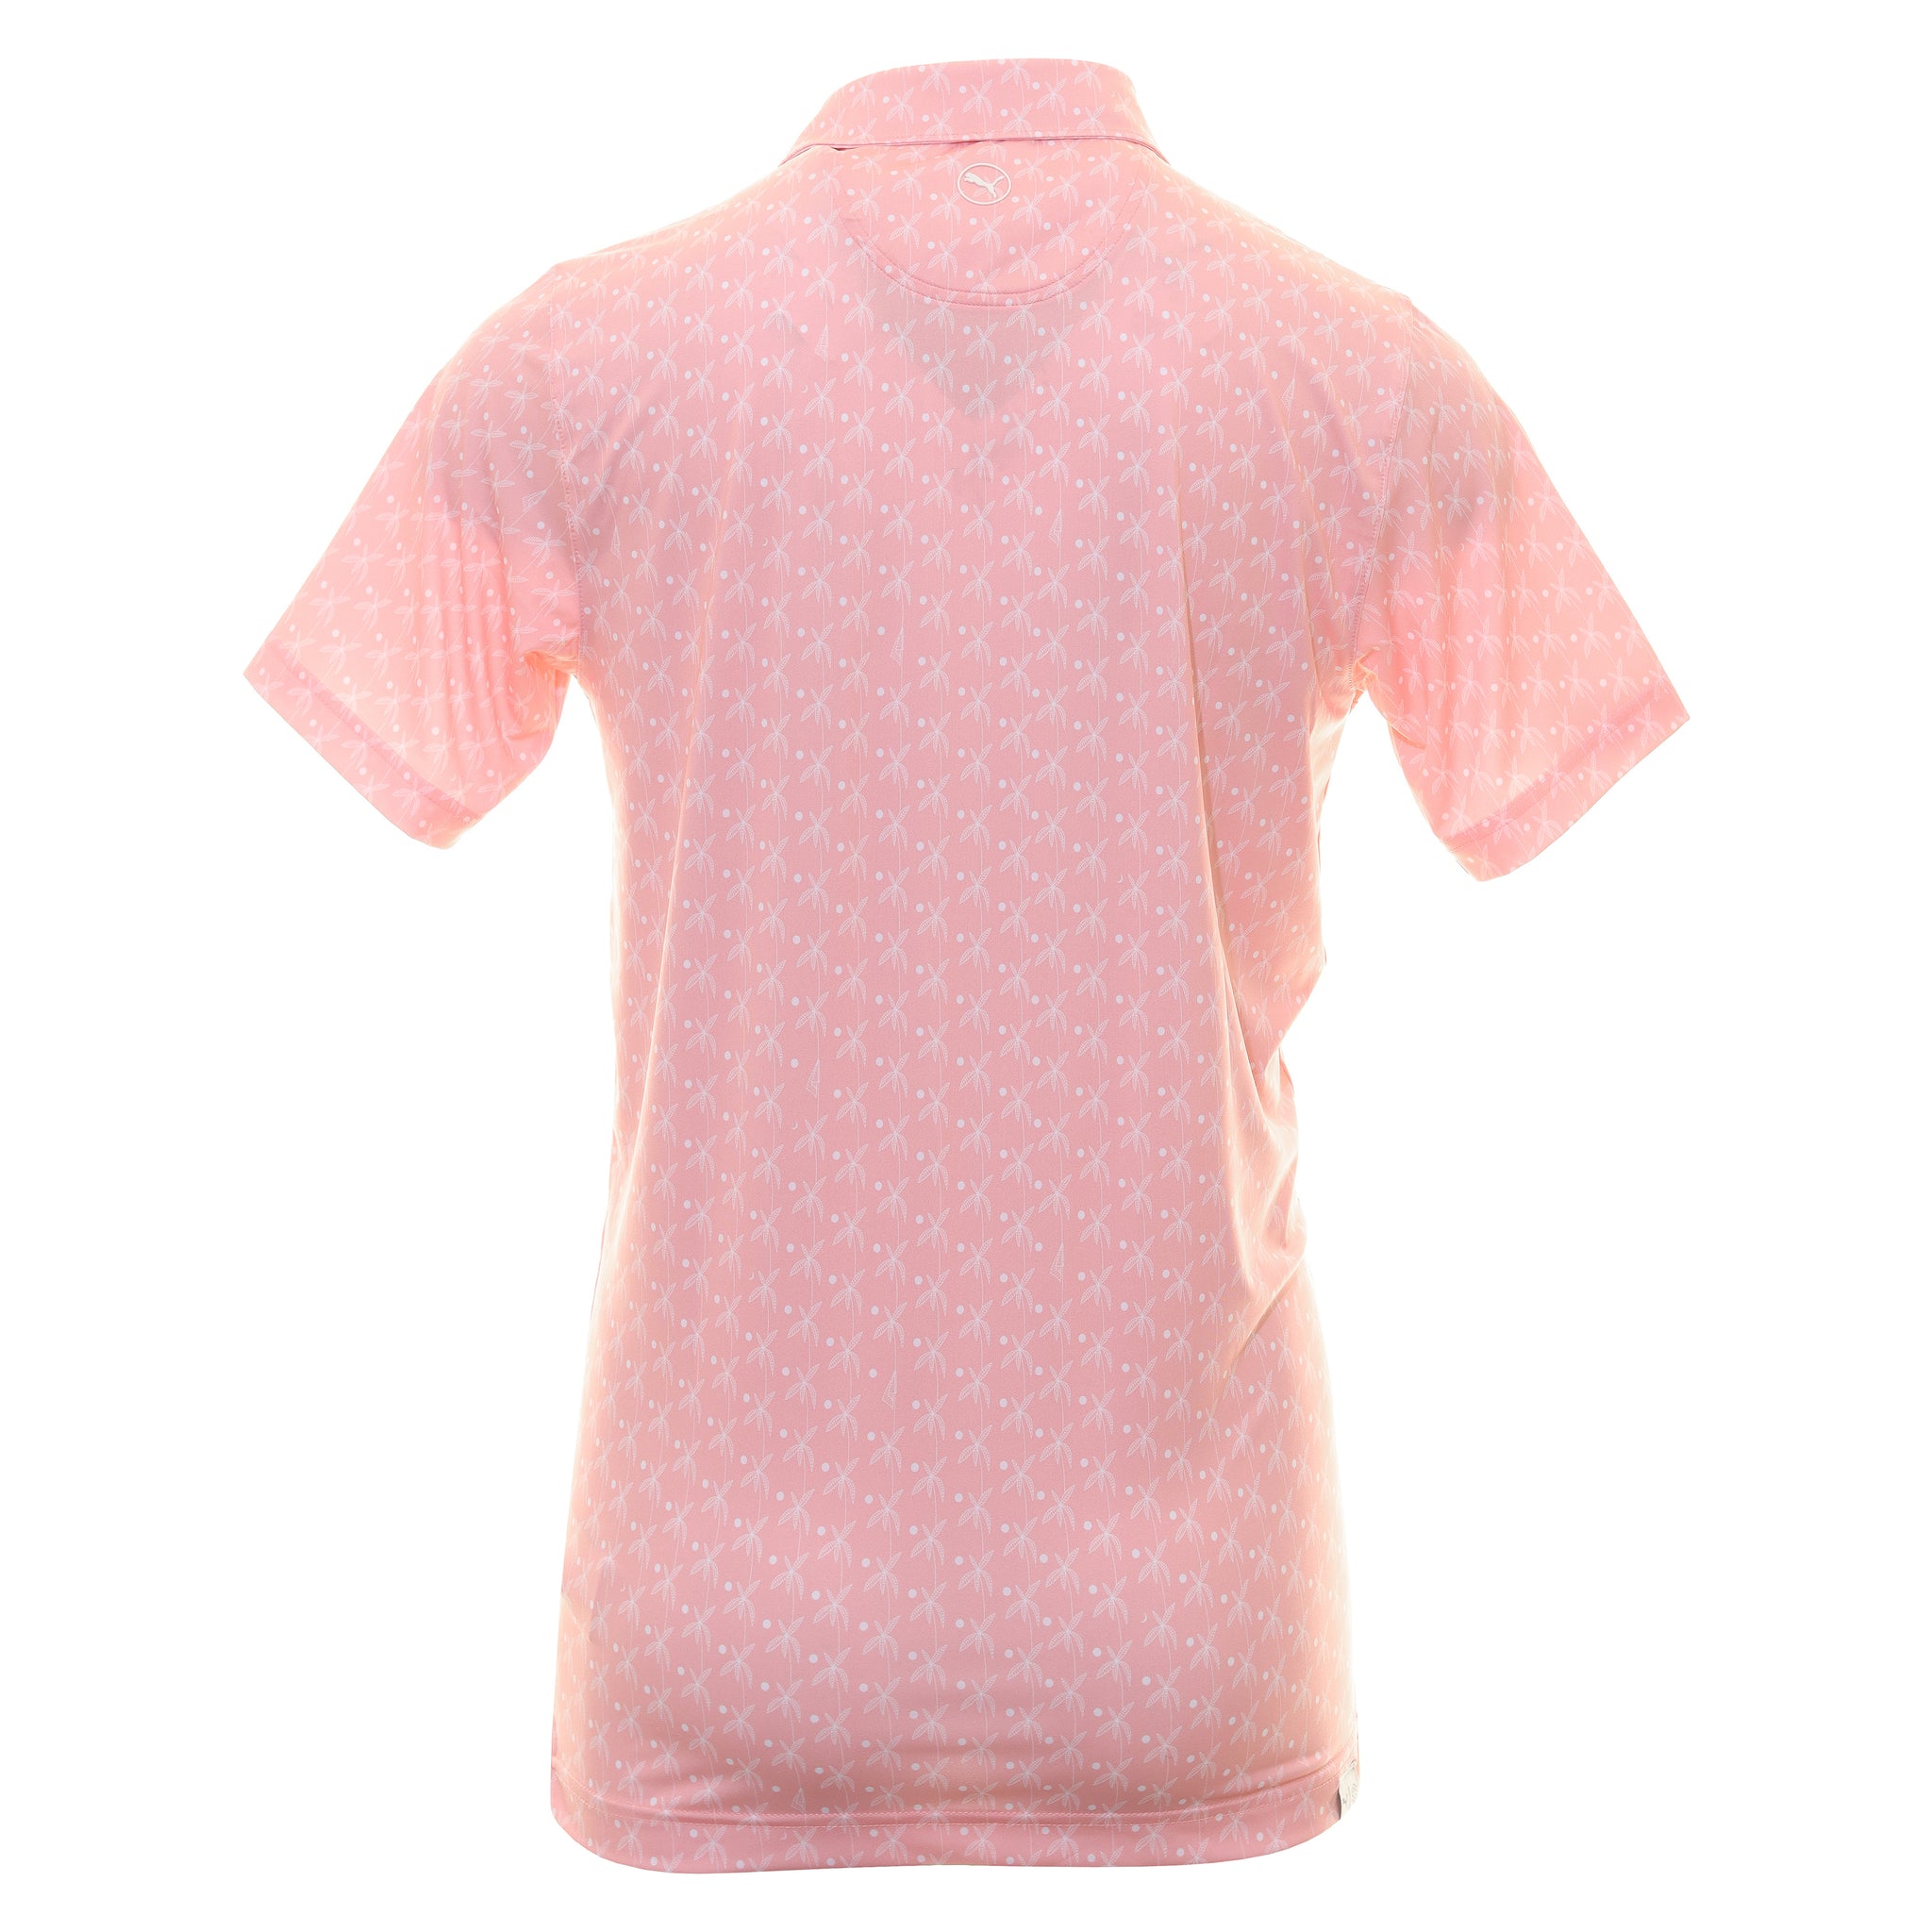 puma-golf-palms-polo-shirt-621549-peach-smoothie-white-glow-06